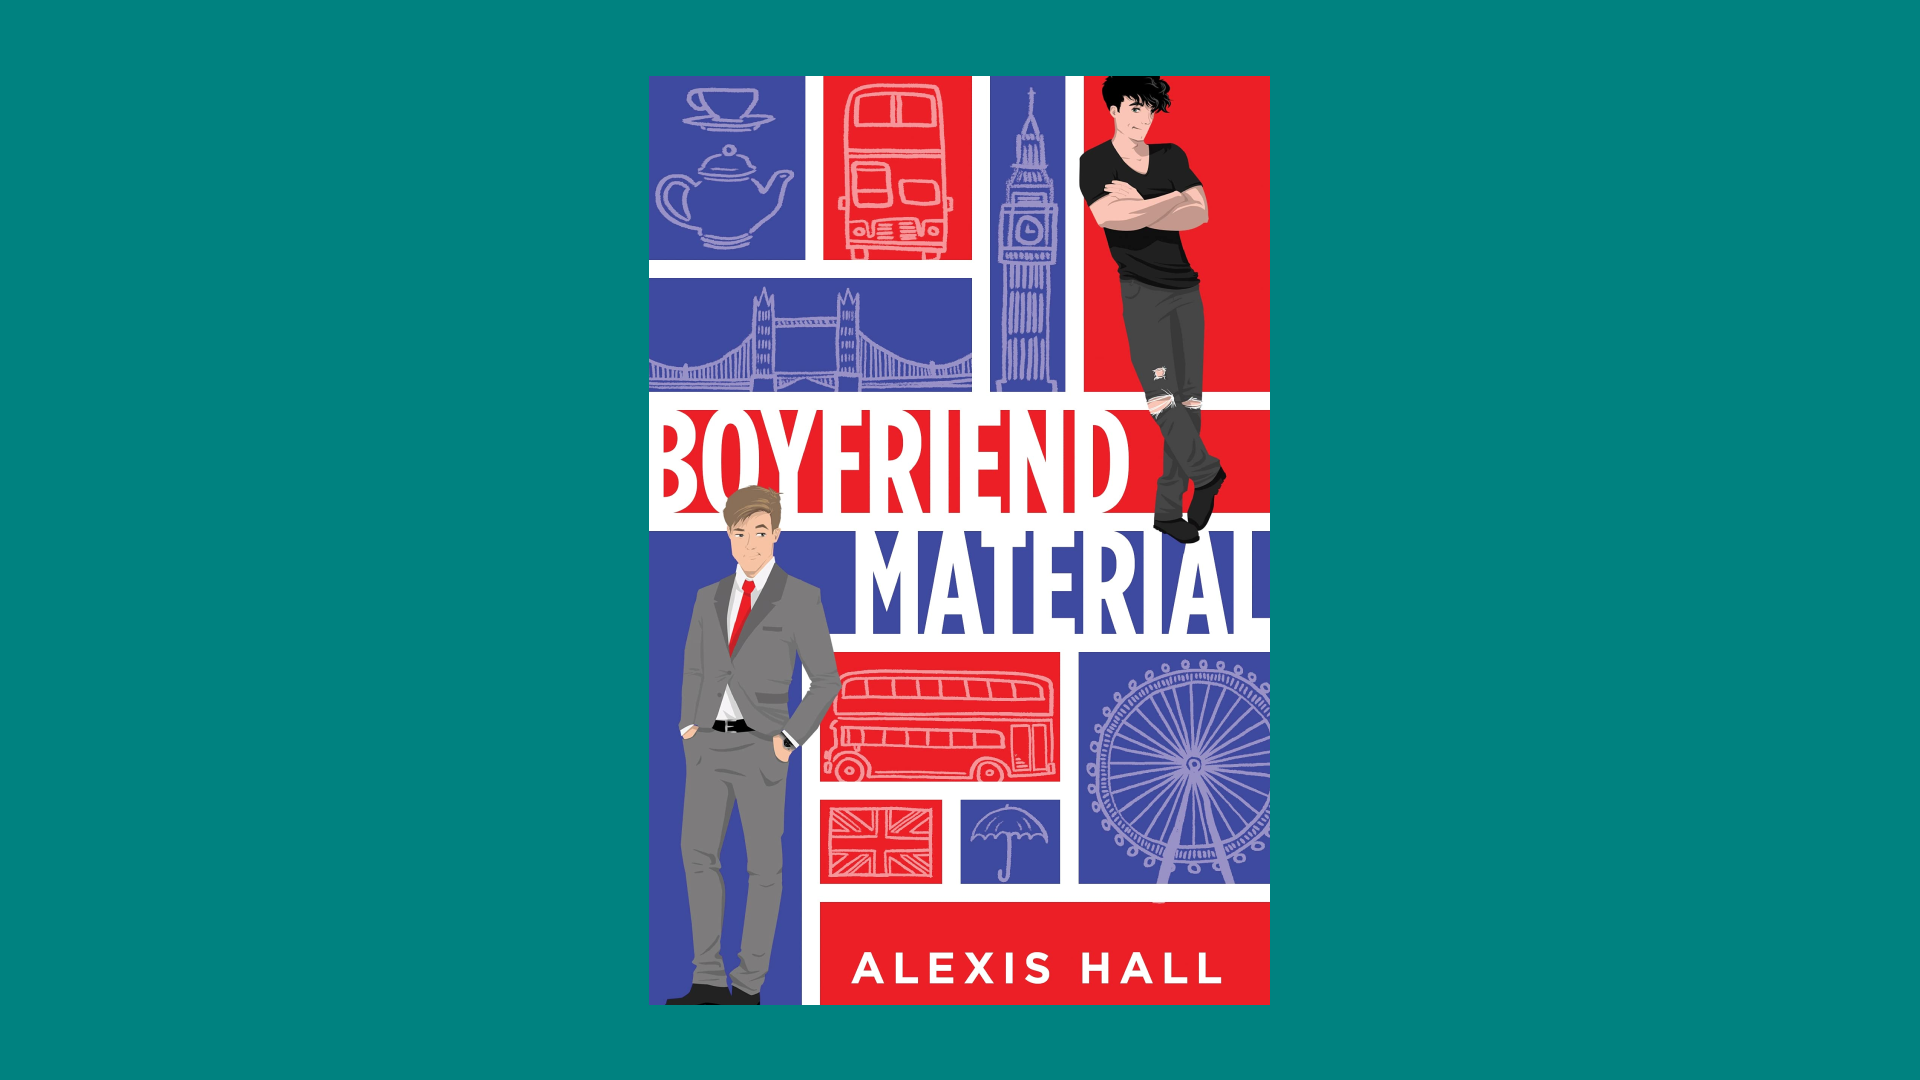 “Boyfriend Material” by Alexis Hall